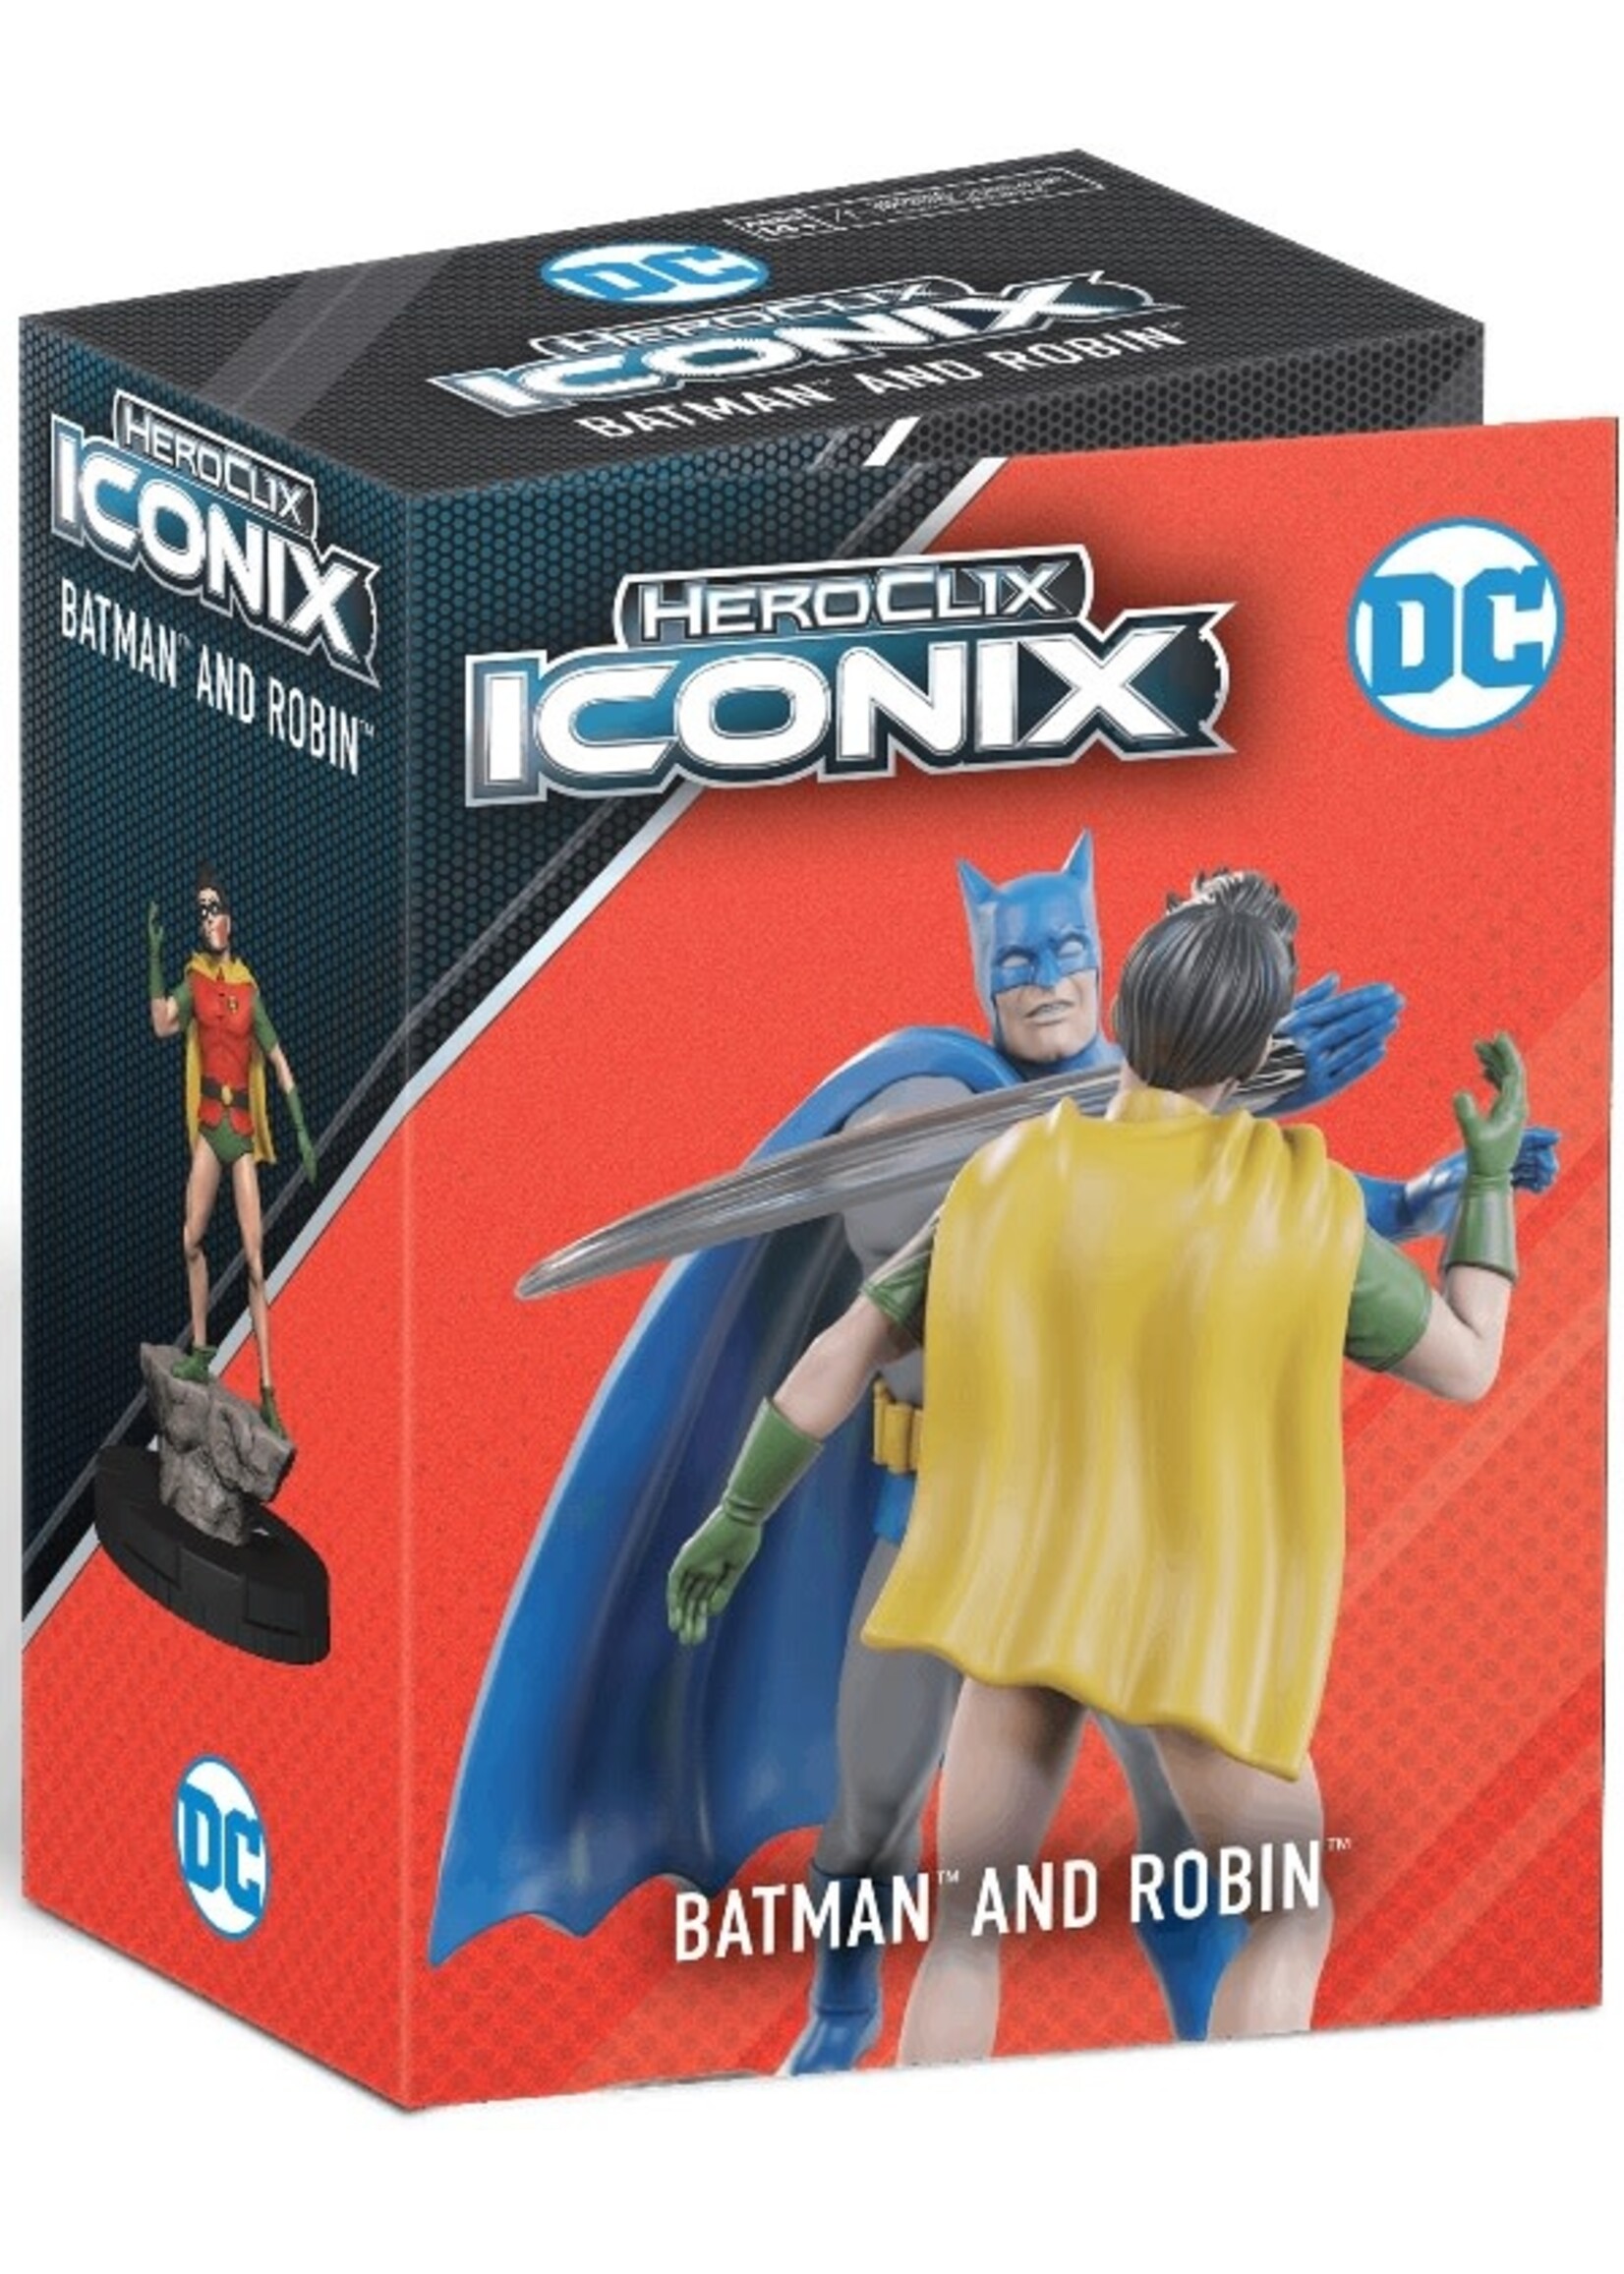 DC HC ICONIX BATMAN AND ROBIN